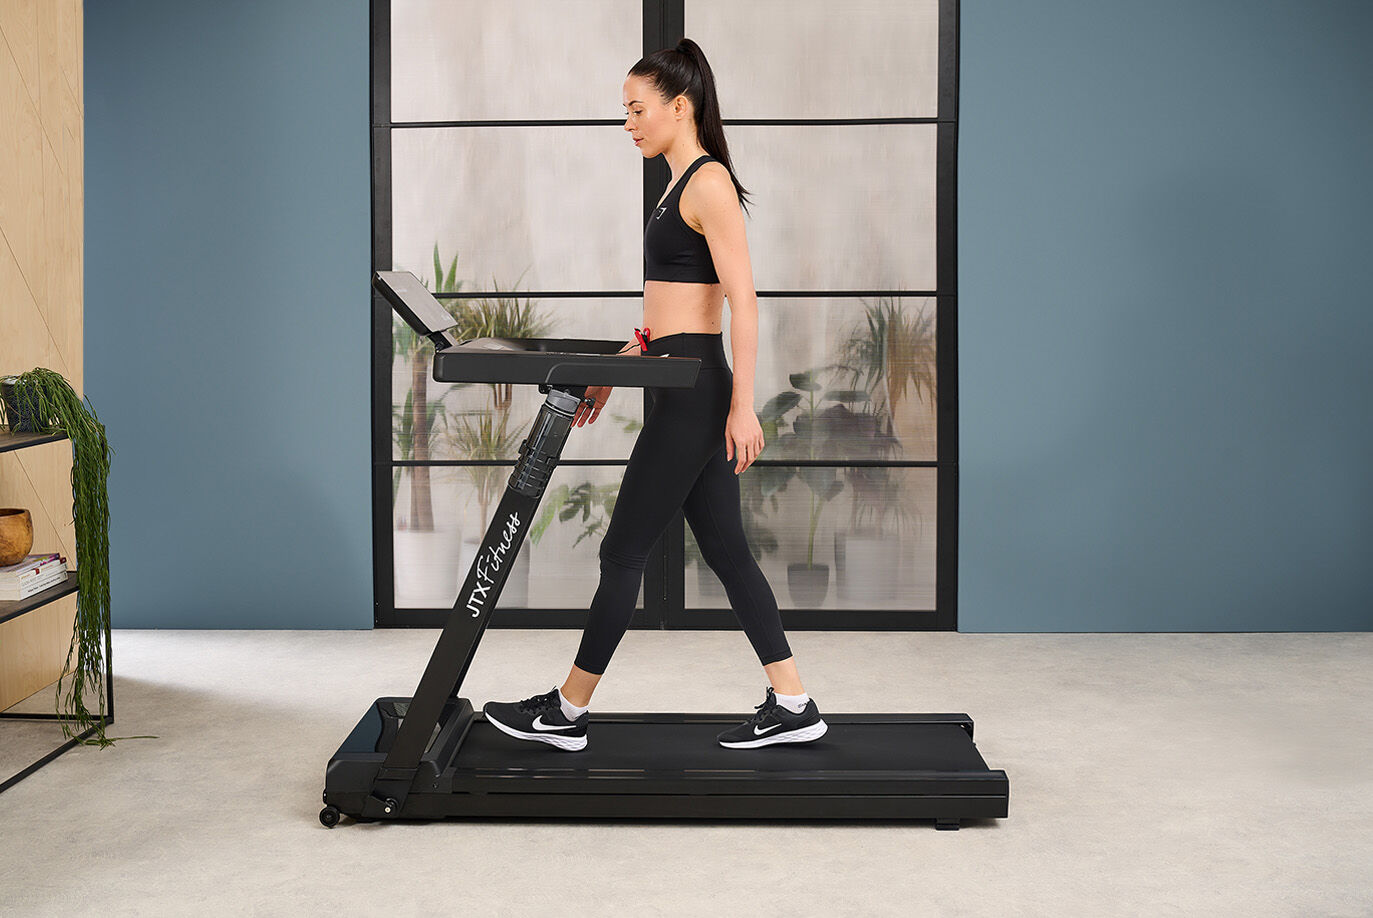 Walk, Jog or Run on the JTX Slim-Line Treadmill